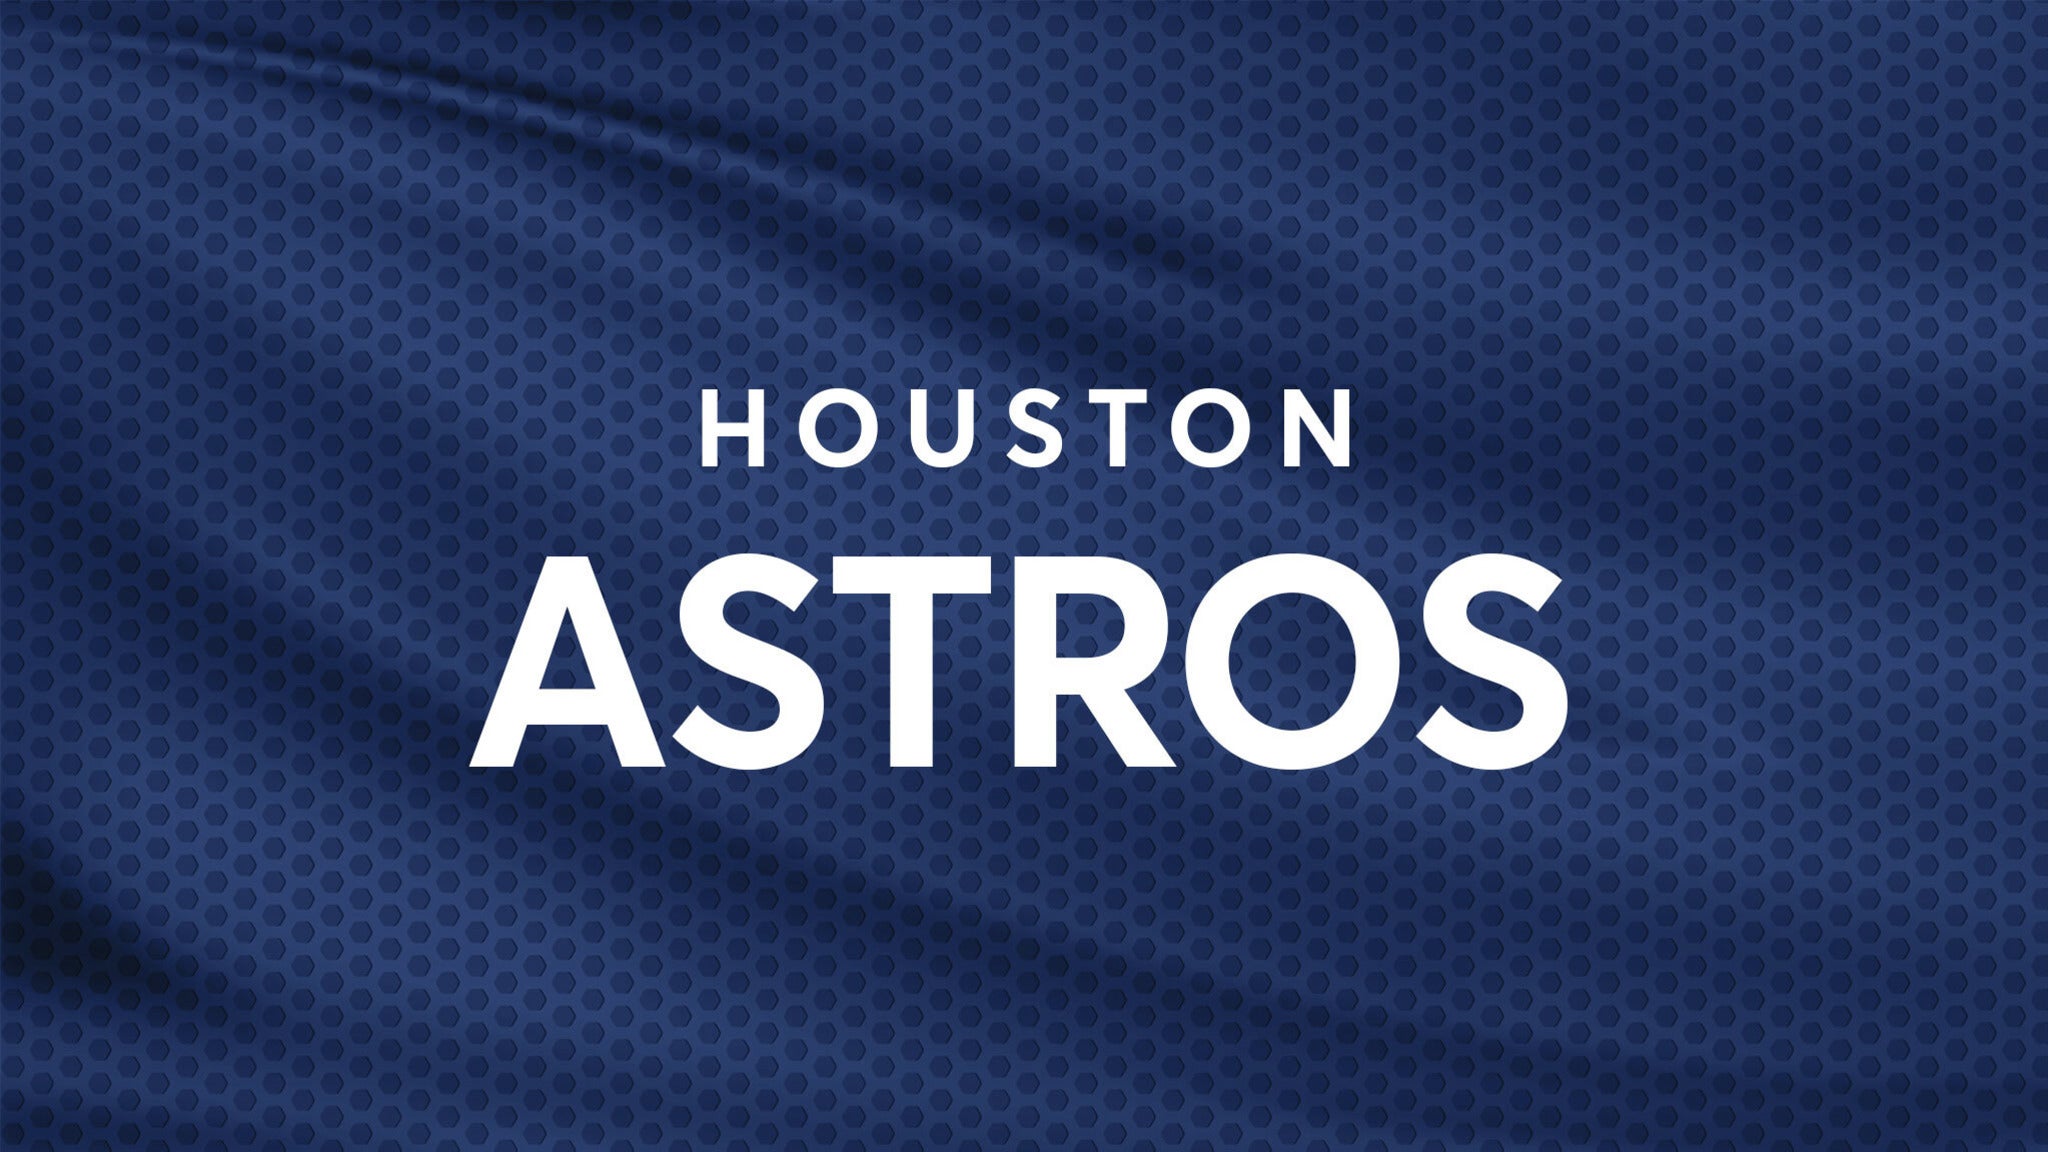 Houston Astros vs. Los Angeles Angels at Minute Maid Park